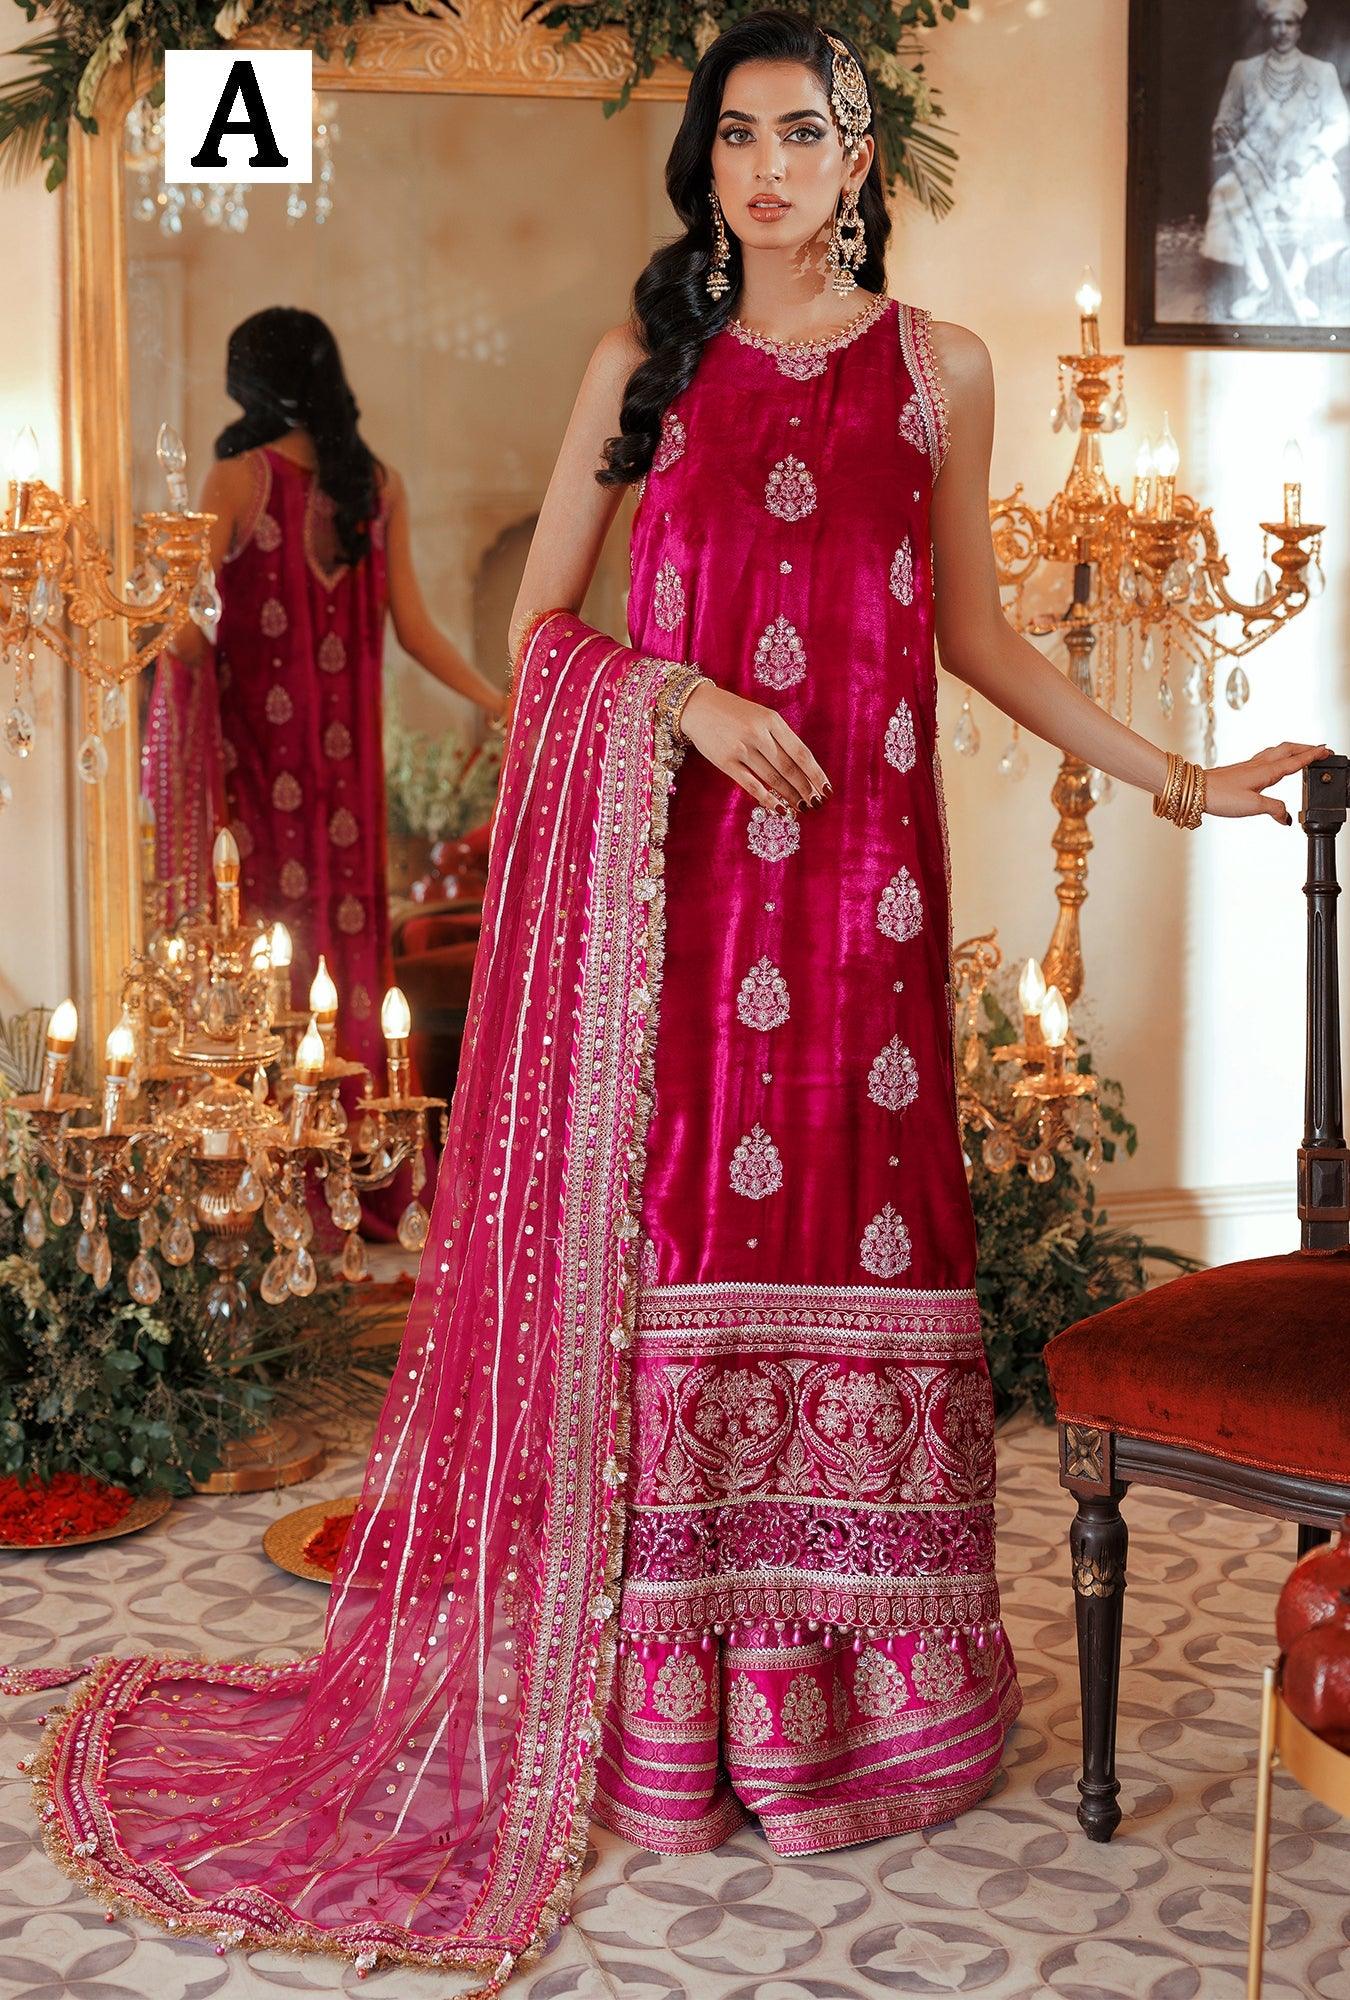 Miran 01 - Noor Wedding Collection 2022 - Miran 01 - Noor Wedding Collection 2022 - Shahana Collection